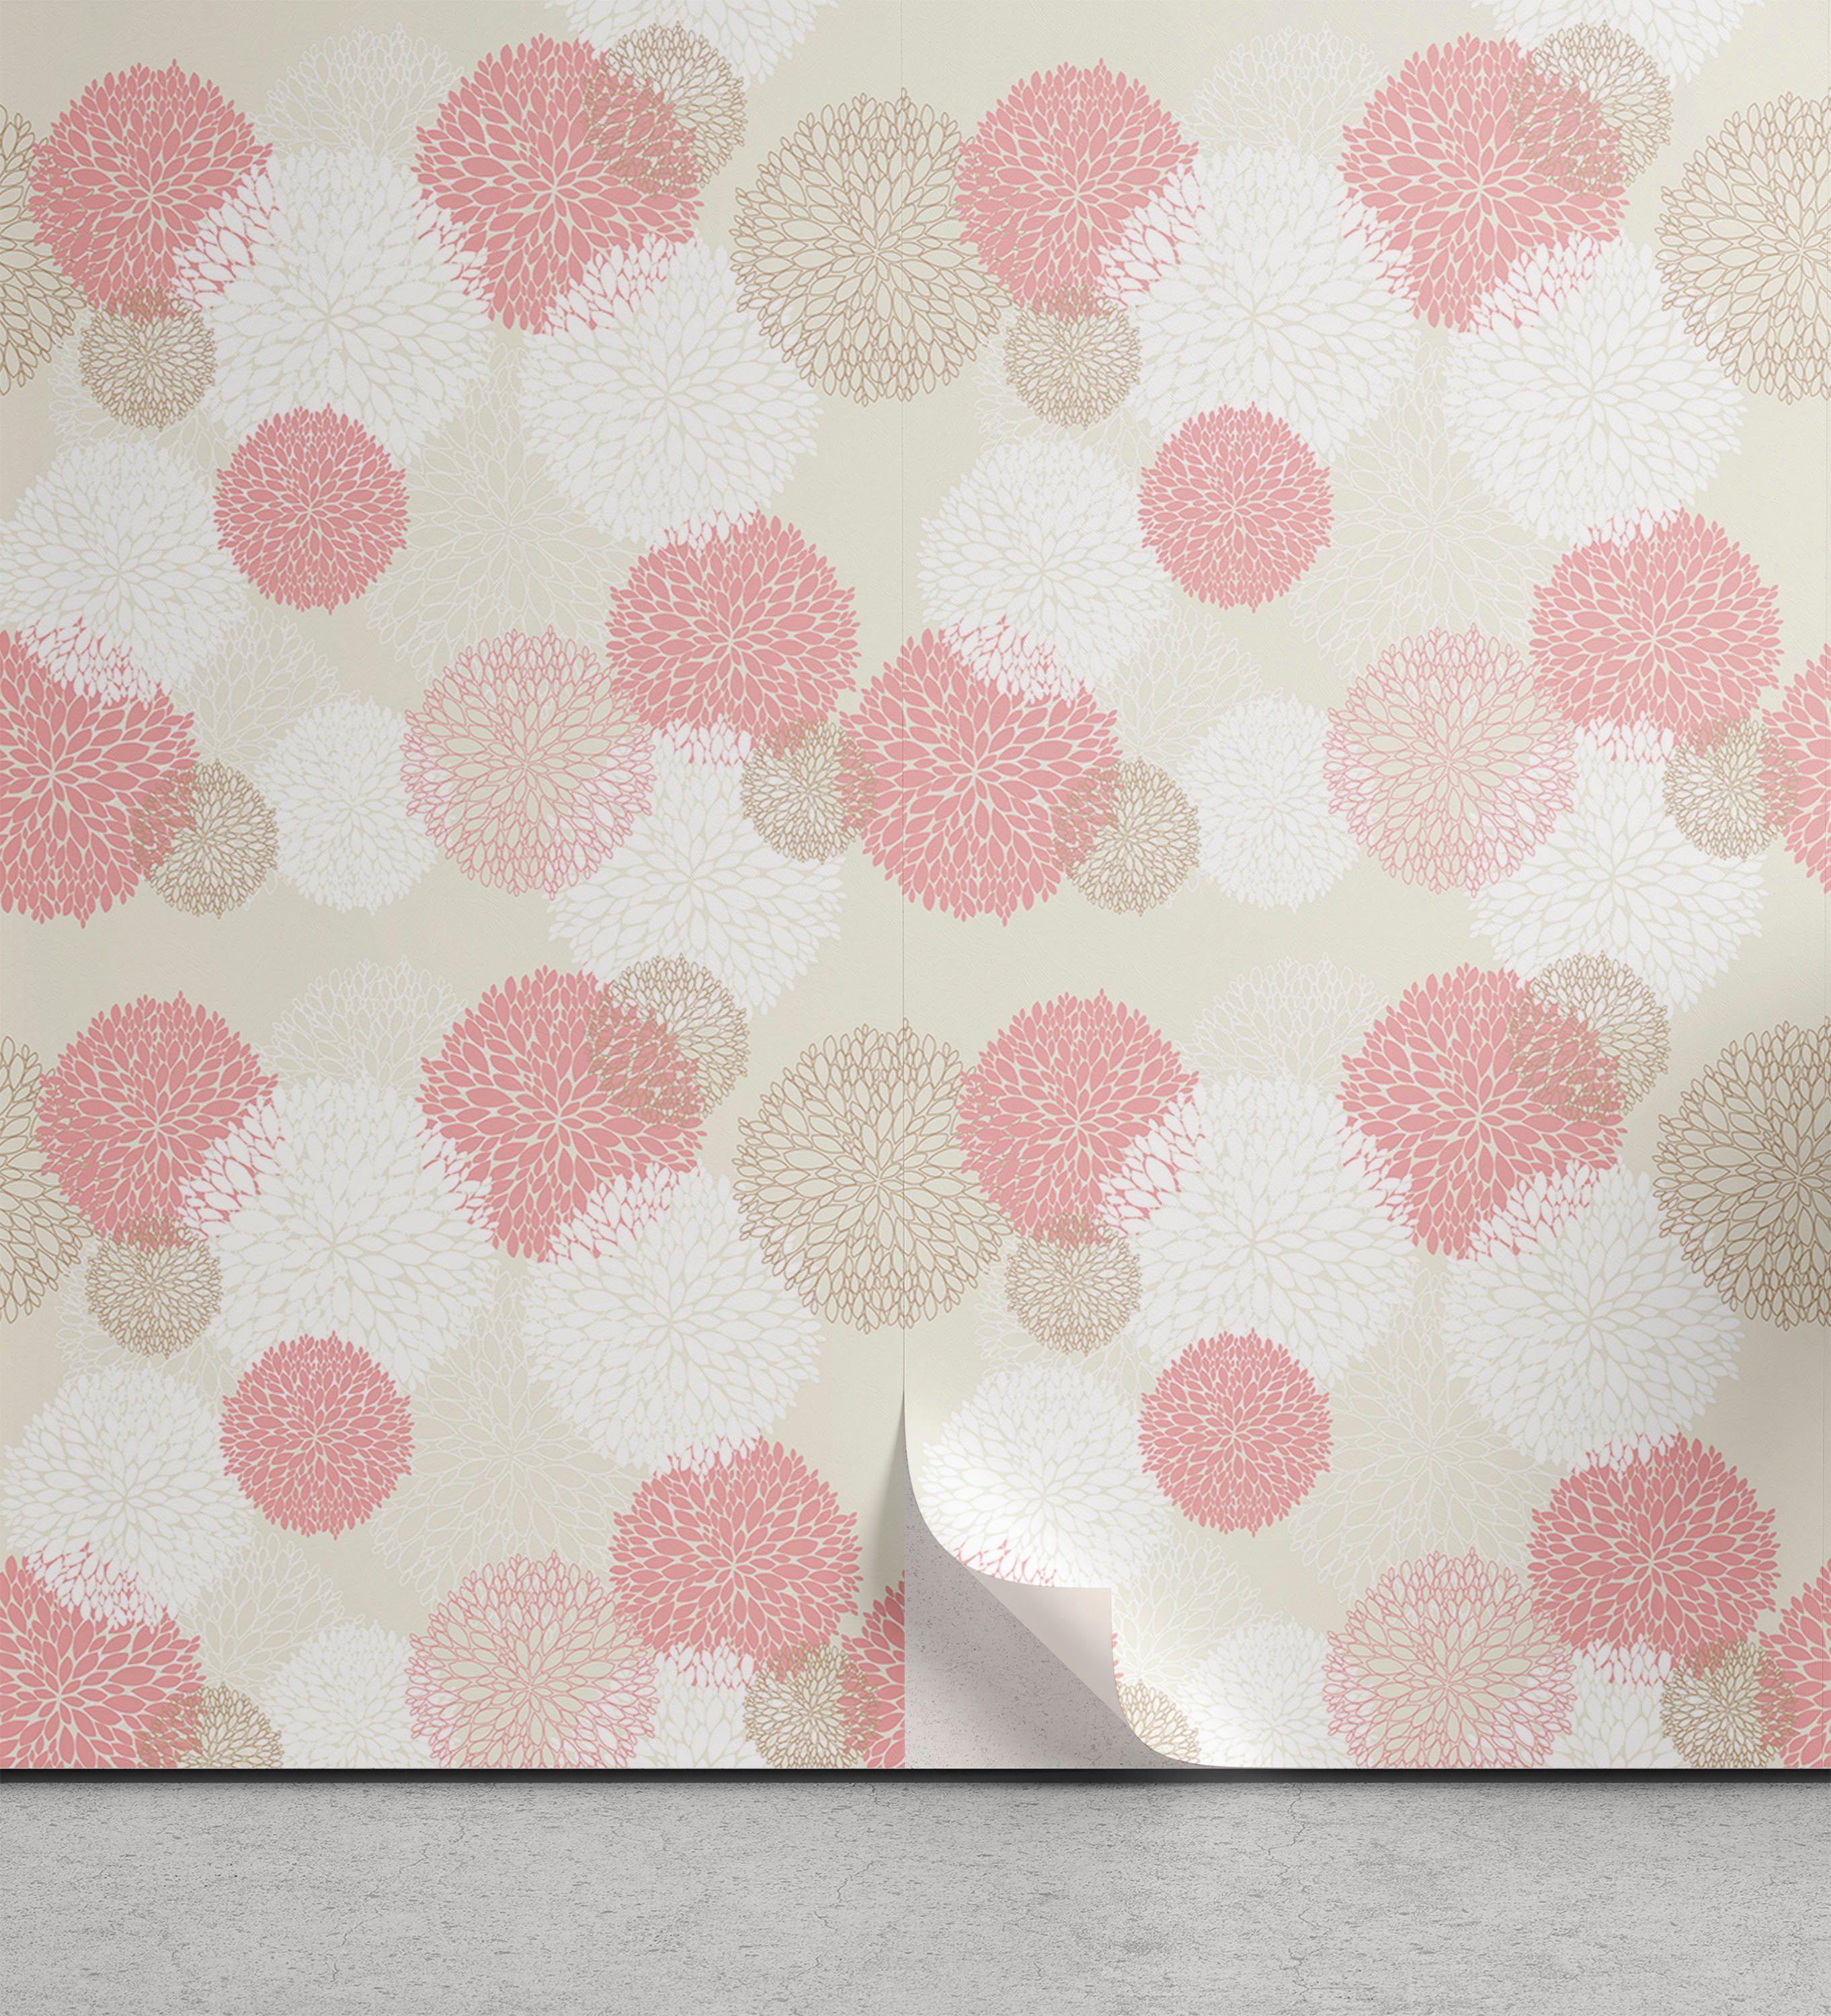 Abakuhaus Vinyltapete selbstklebendes Wohnzimmer Küchenakzent, Pastell Weiches Frühlings-Blumenmotiv | Vinyltapeten